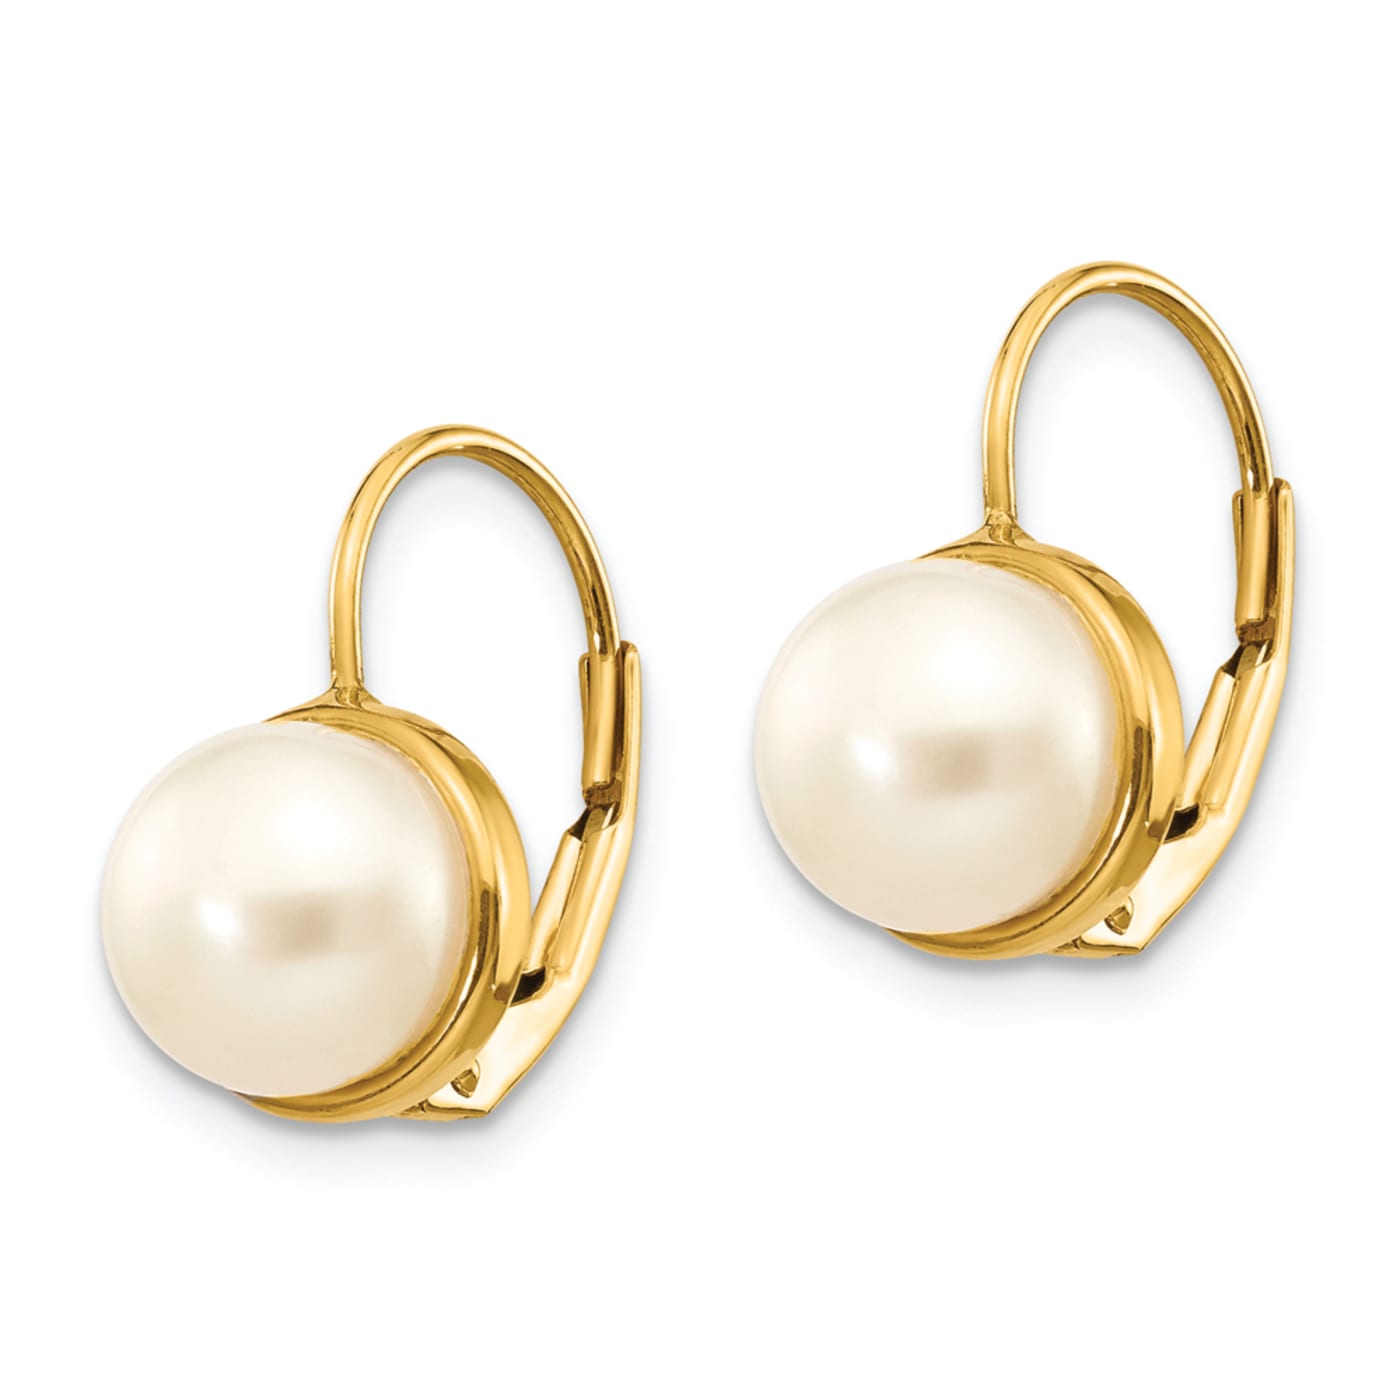 14K White Gold Freshwater Pearl and Pavé Diamond Leverback Earrings